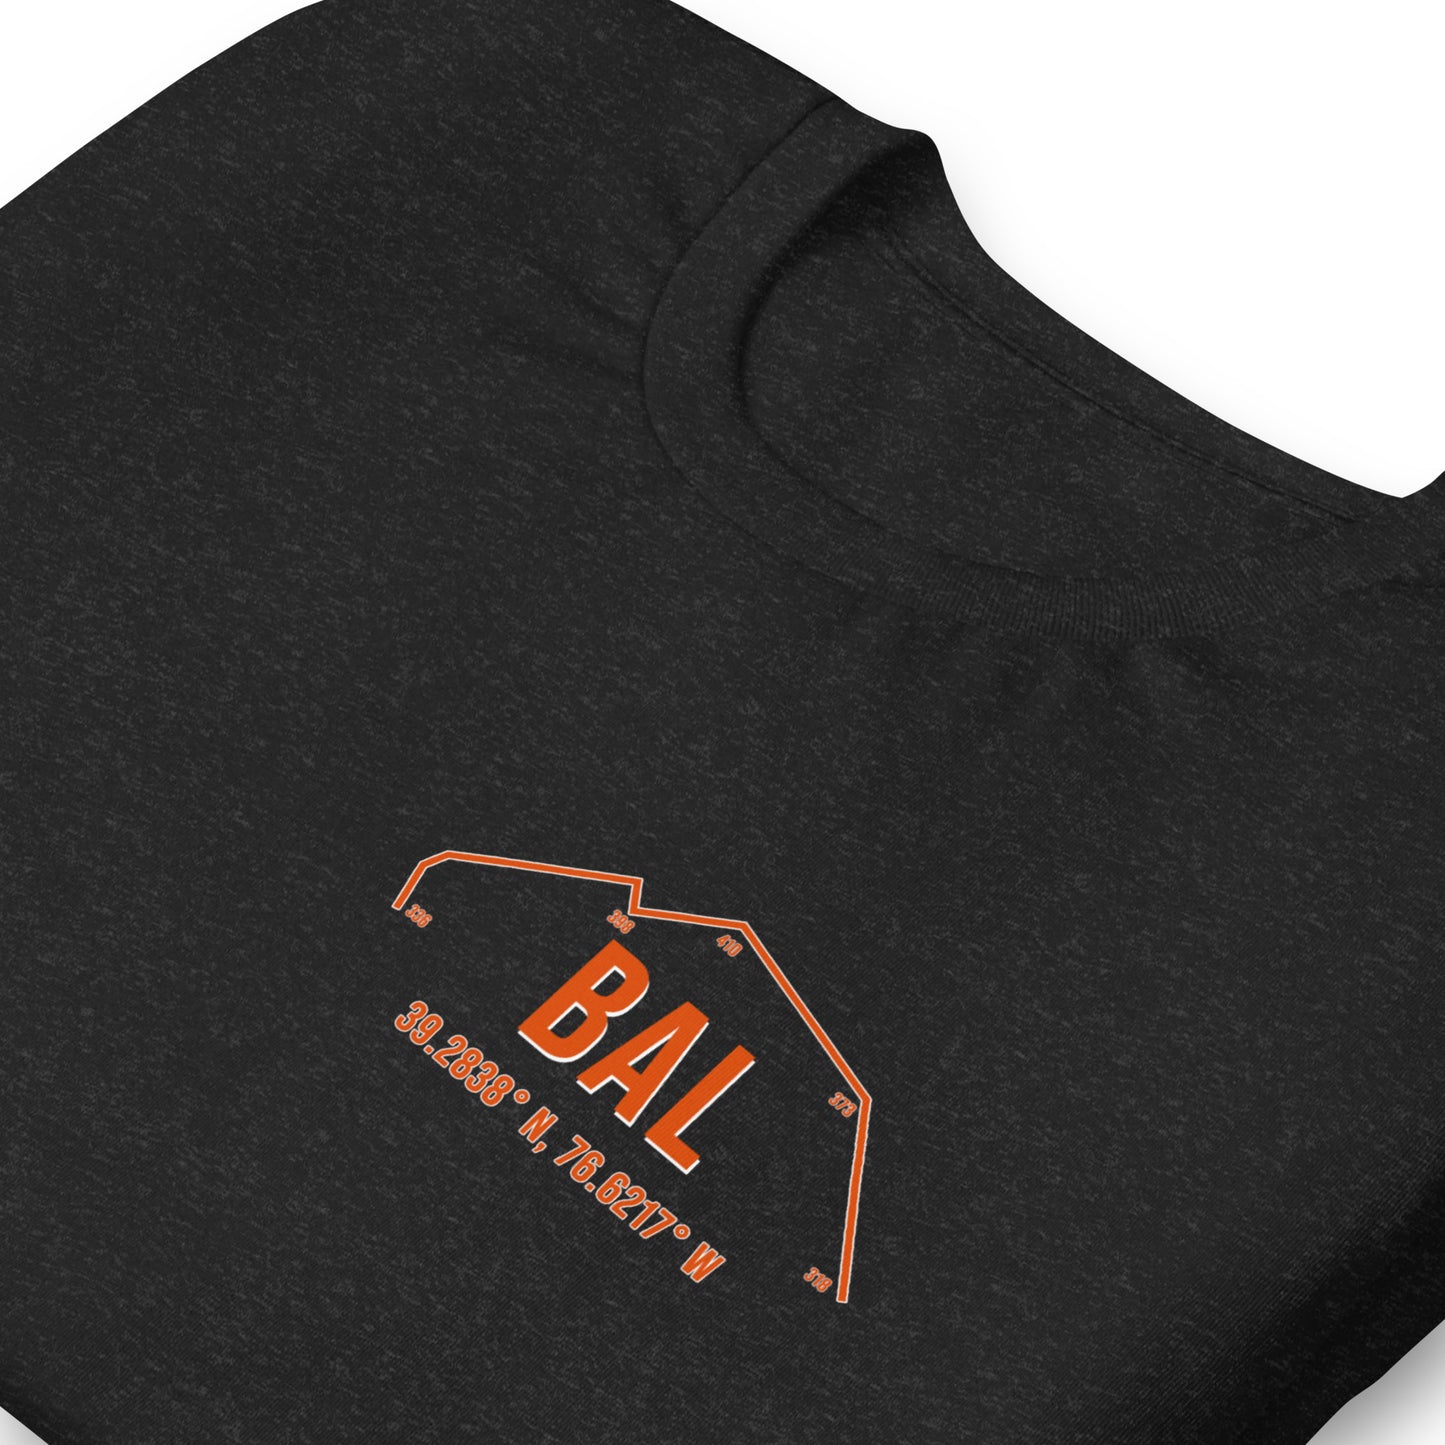 Unisex BAL Outfield Wall T-Shirt | Black | Orange